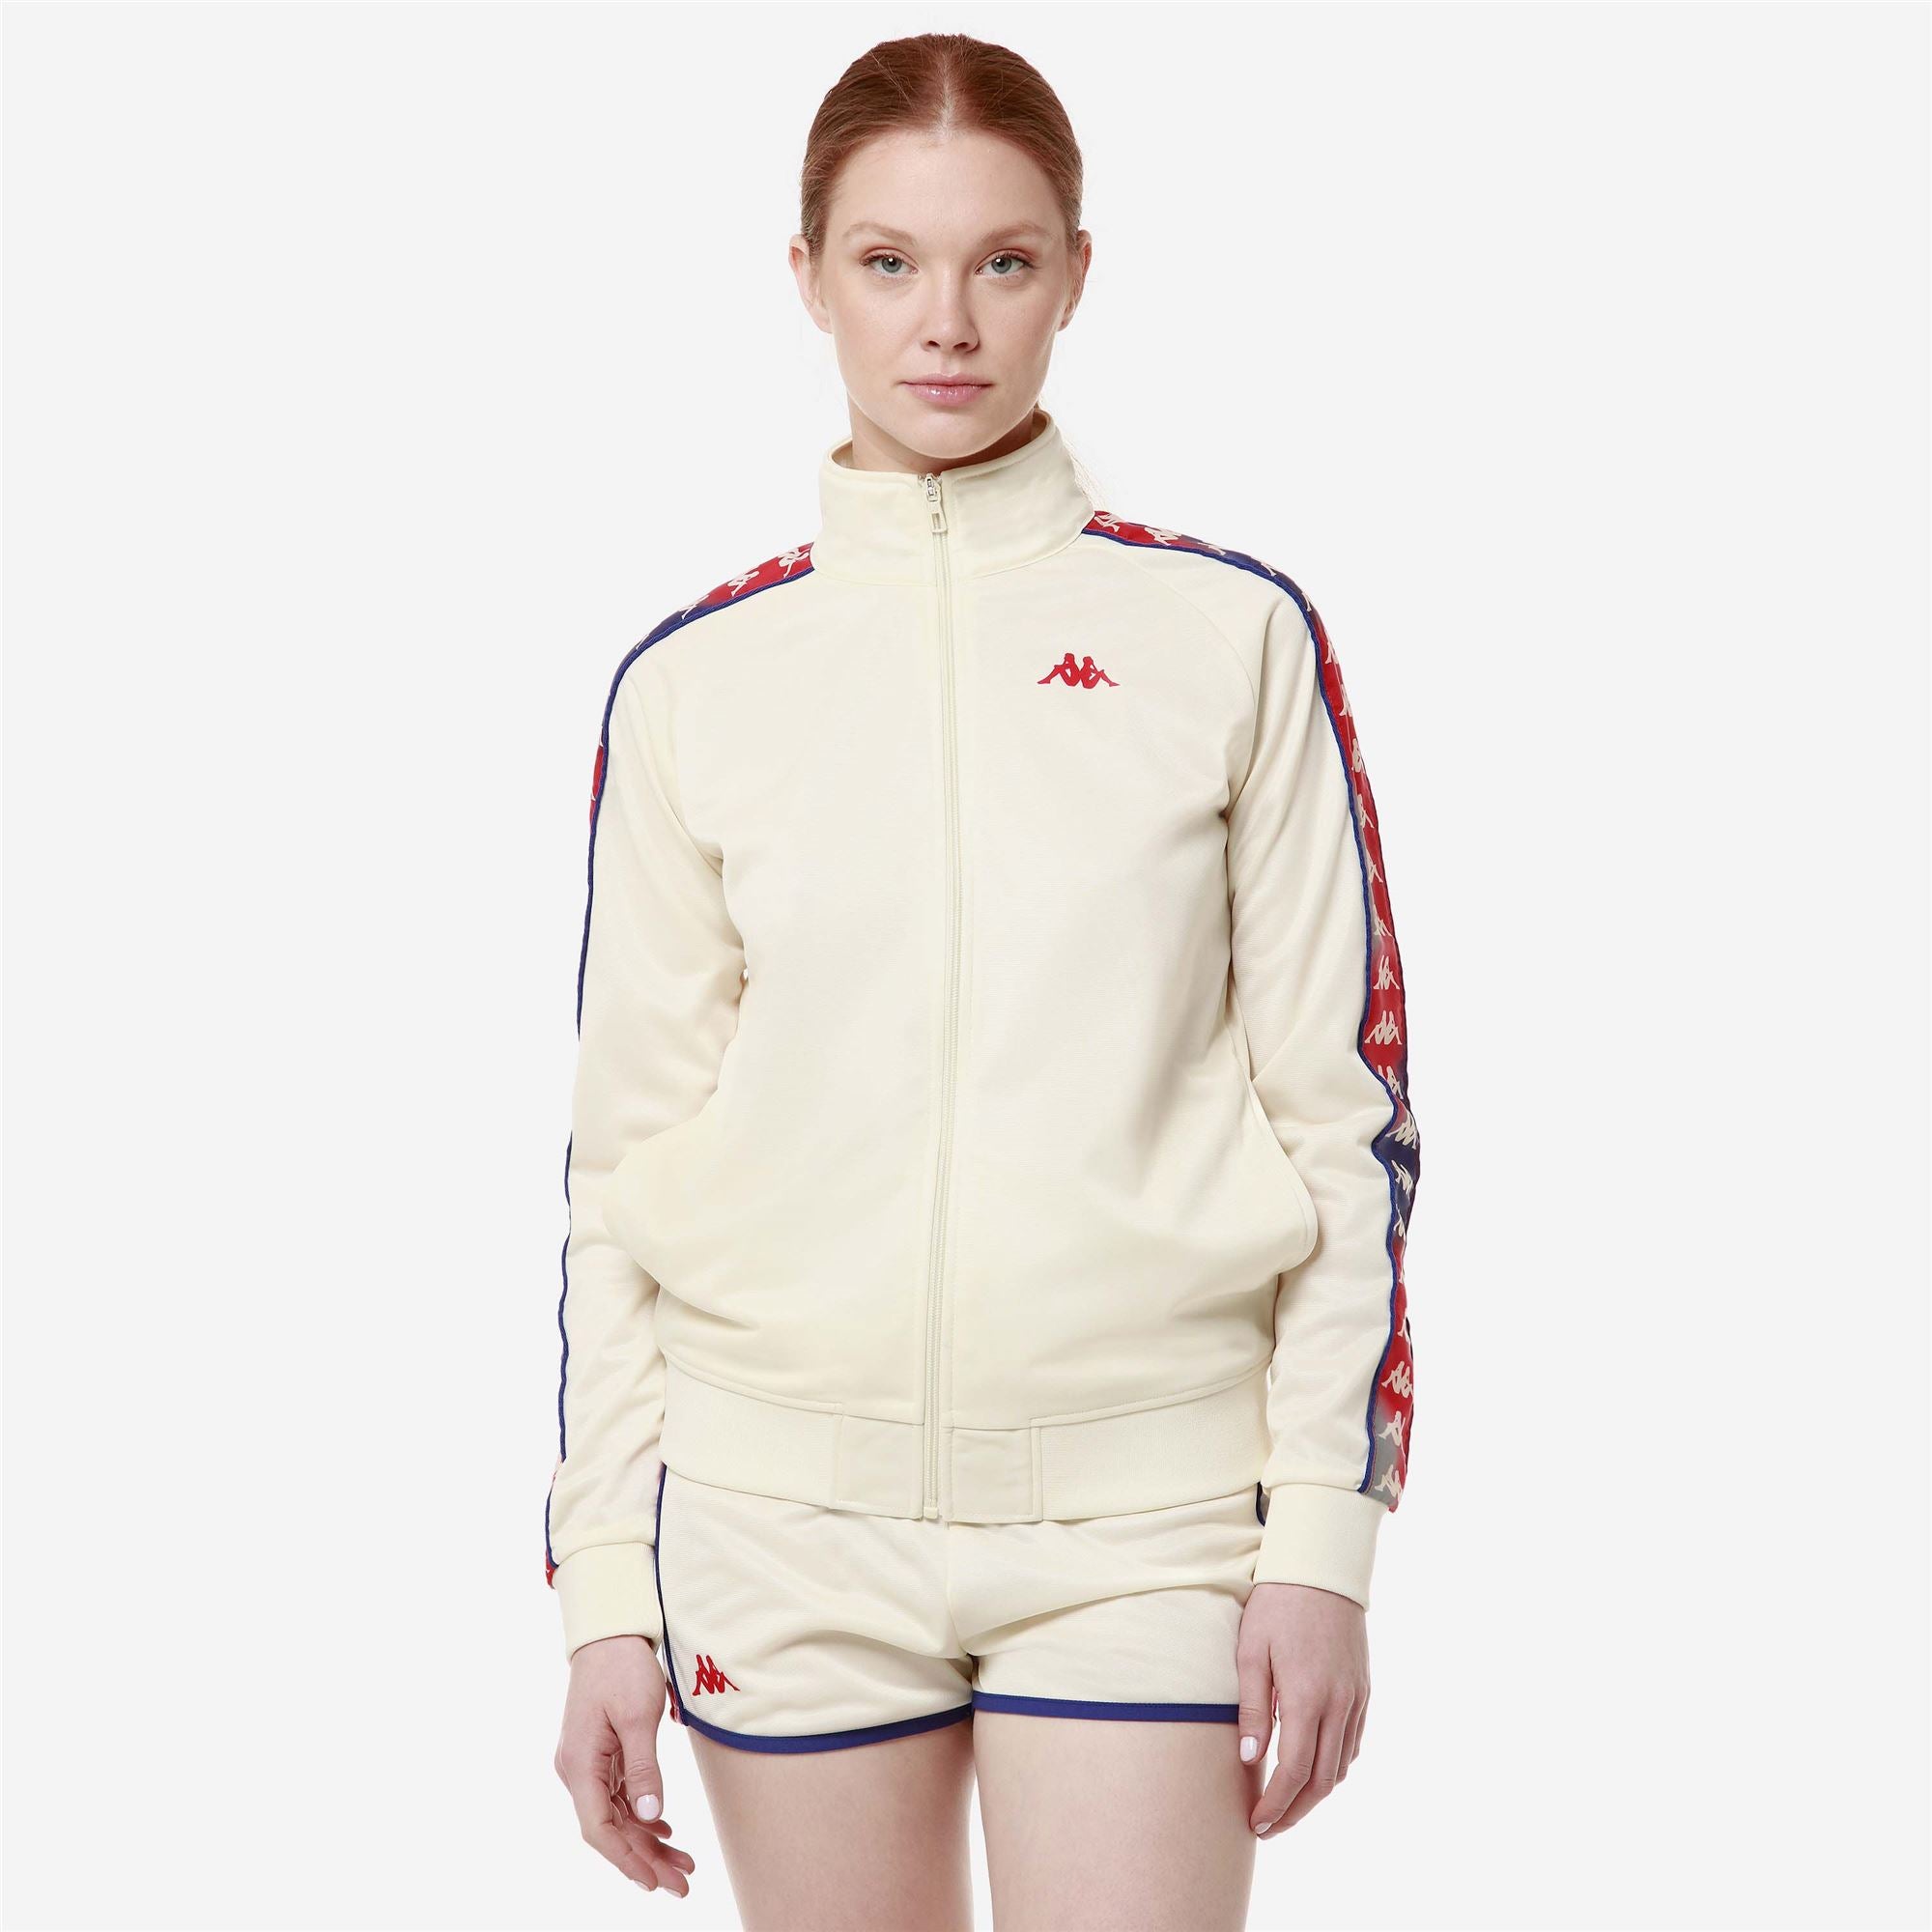 222 BANDA WANNISTONGT - Fleece - Jacket - Woman - GRAPHIK TAPE WHITE  ANTIQUE-RED-GREY